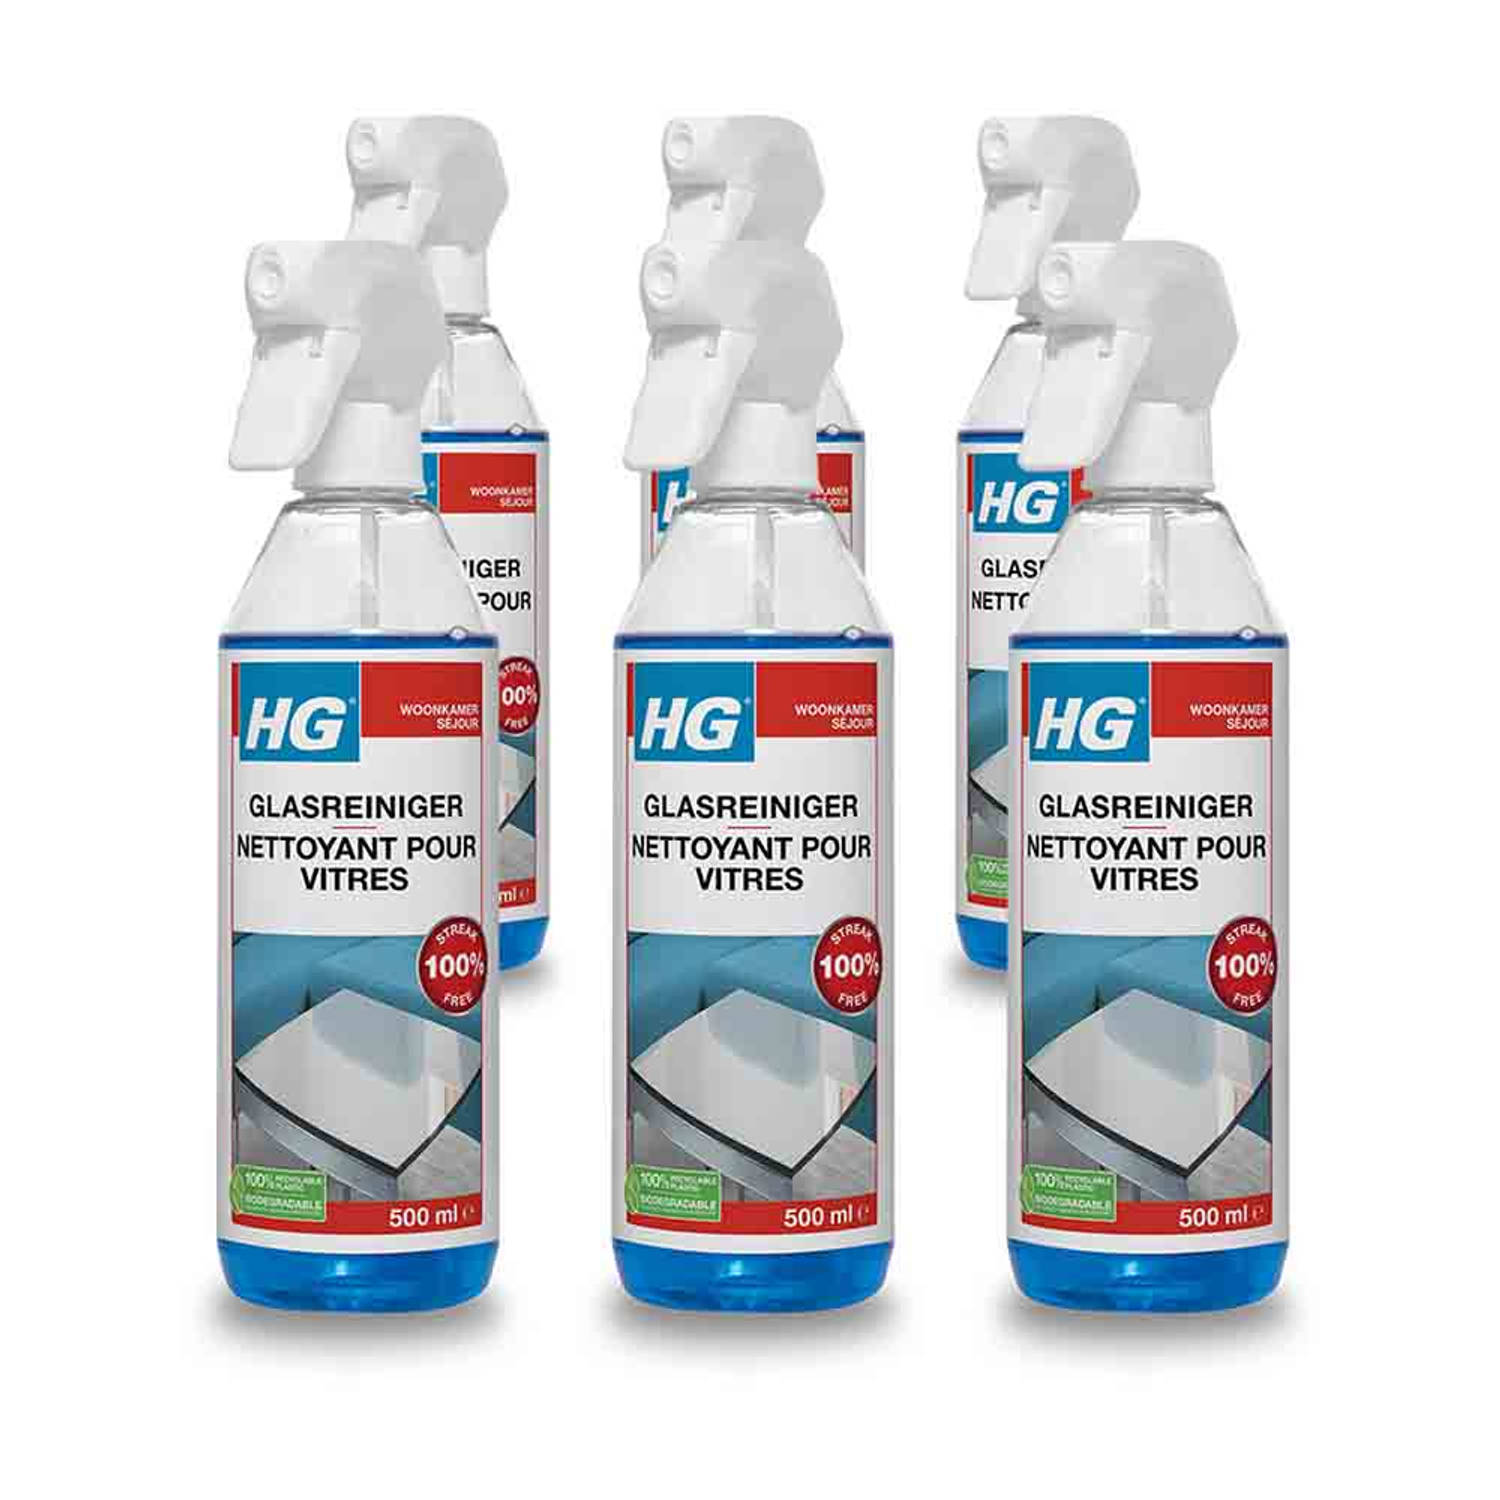 HG glasreiniger 500 ml - 6 stuks